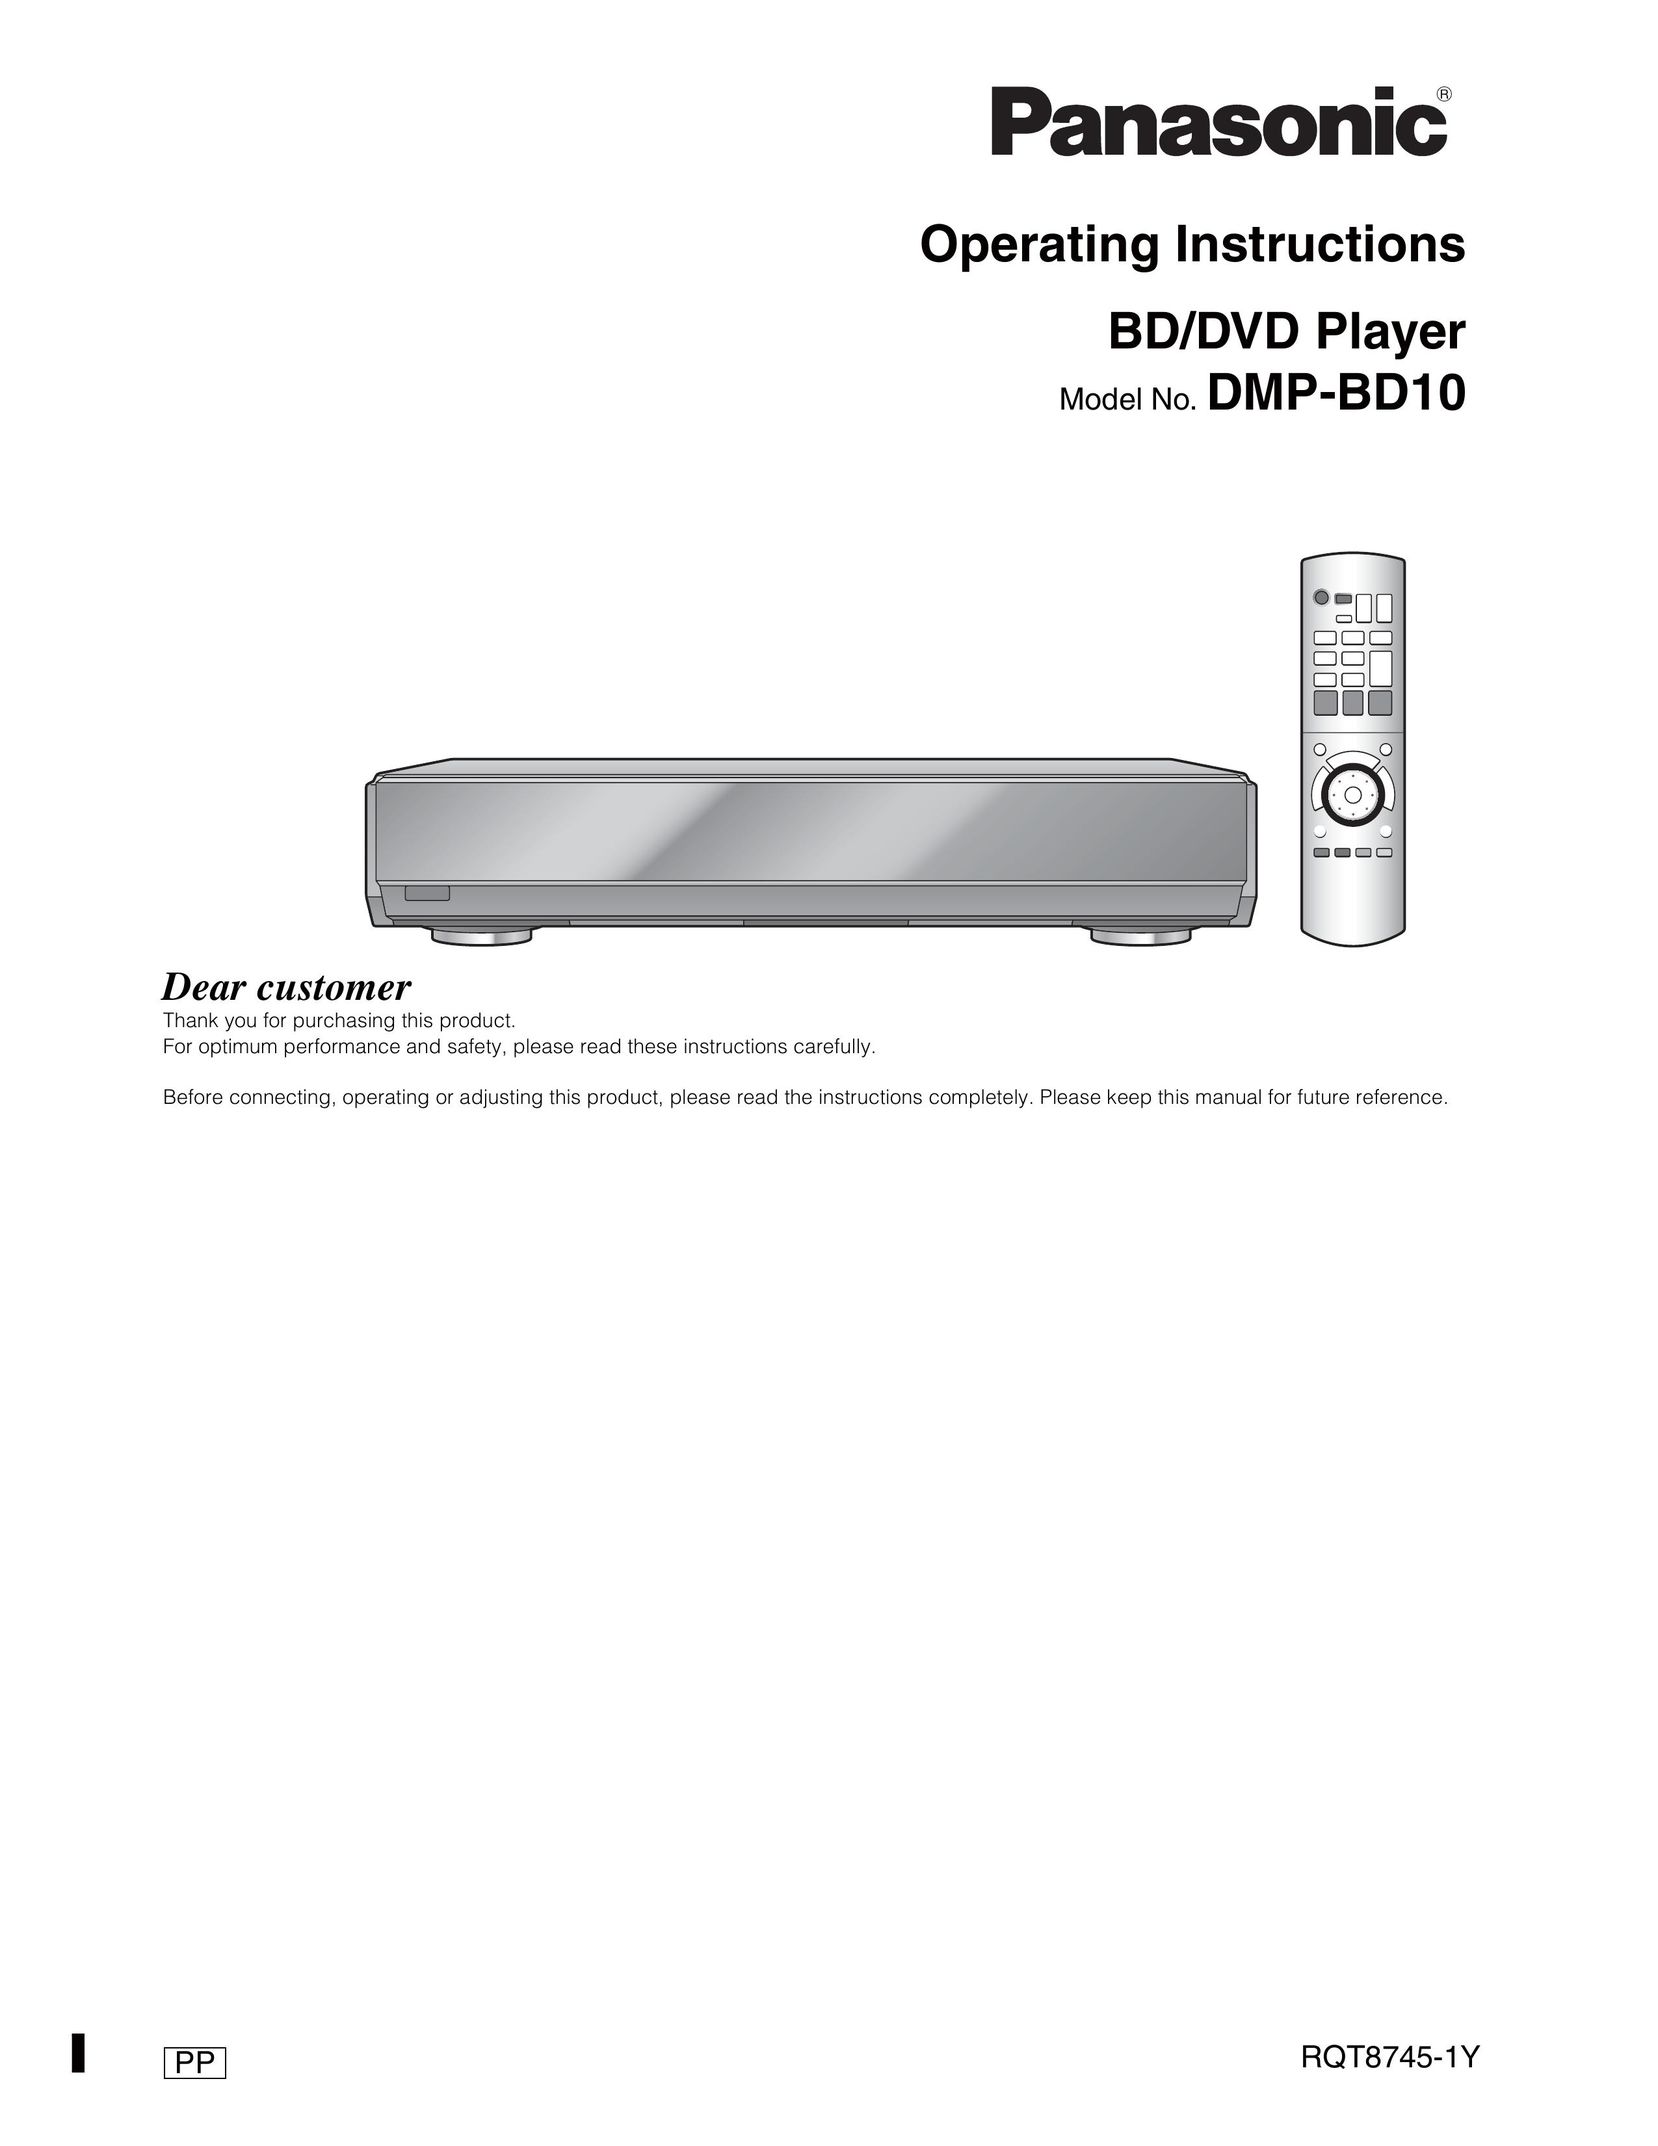 Panasonic DMP-BD10 DVD Player User Manual